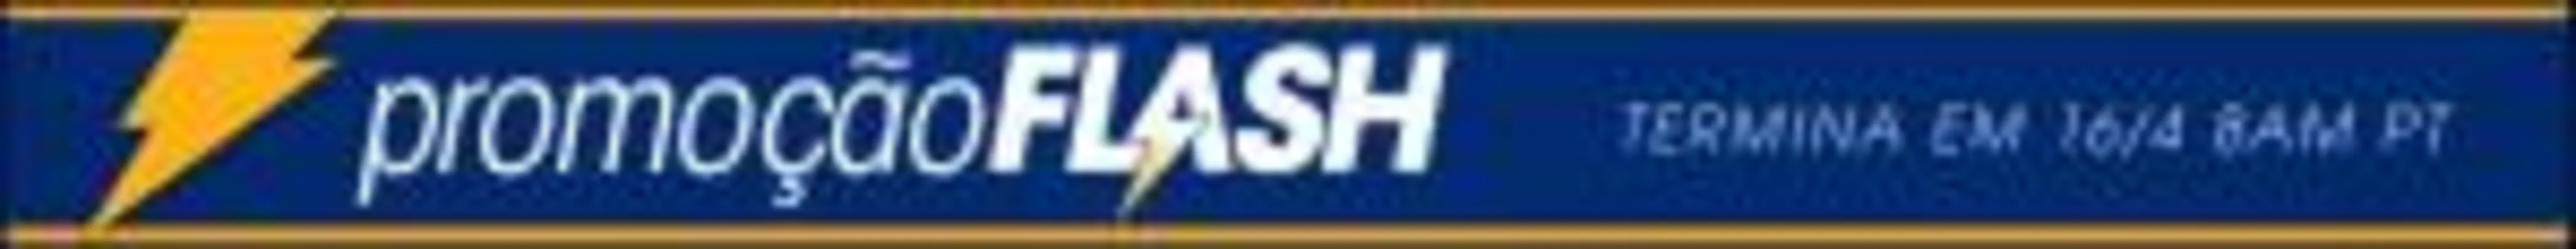 Promoção Flash na PSN